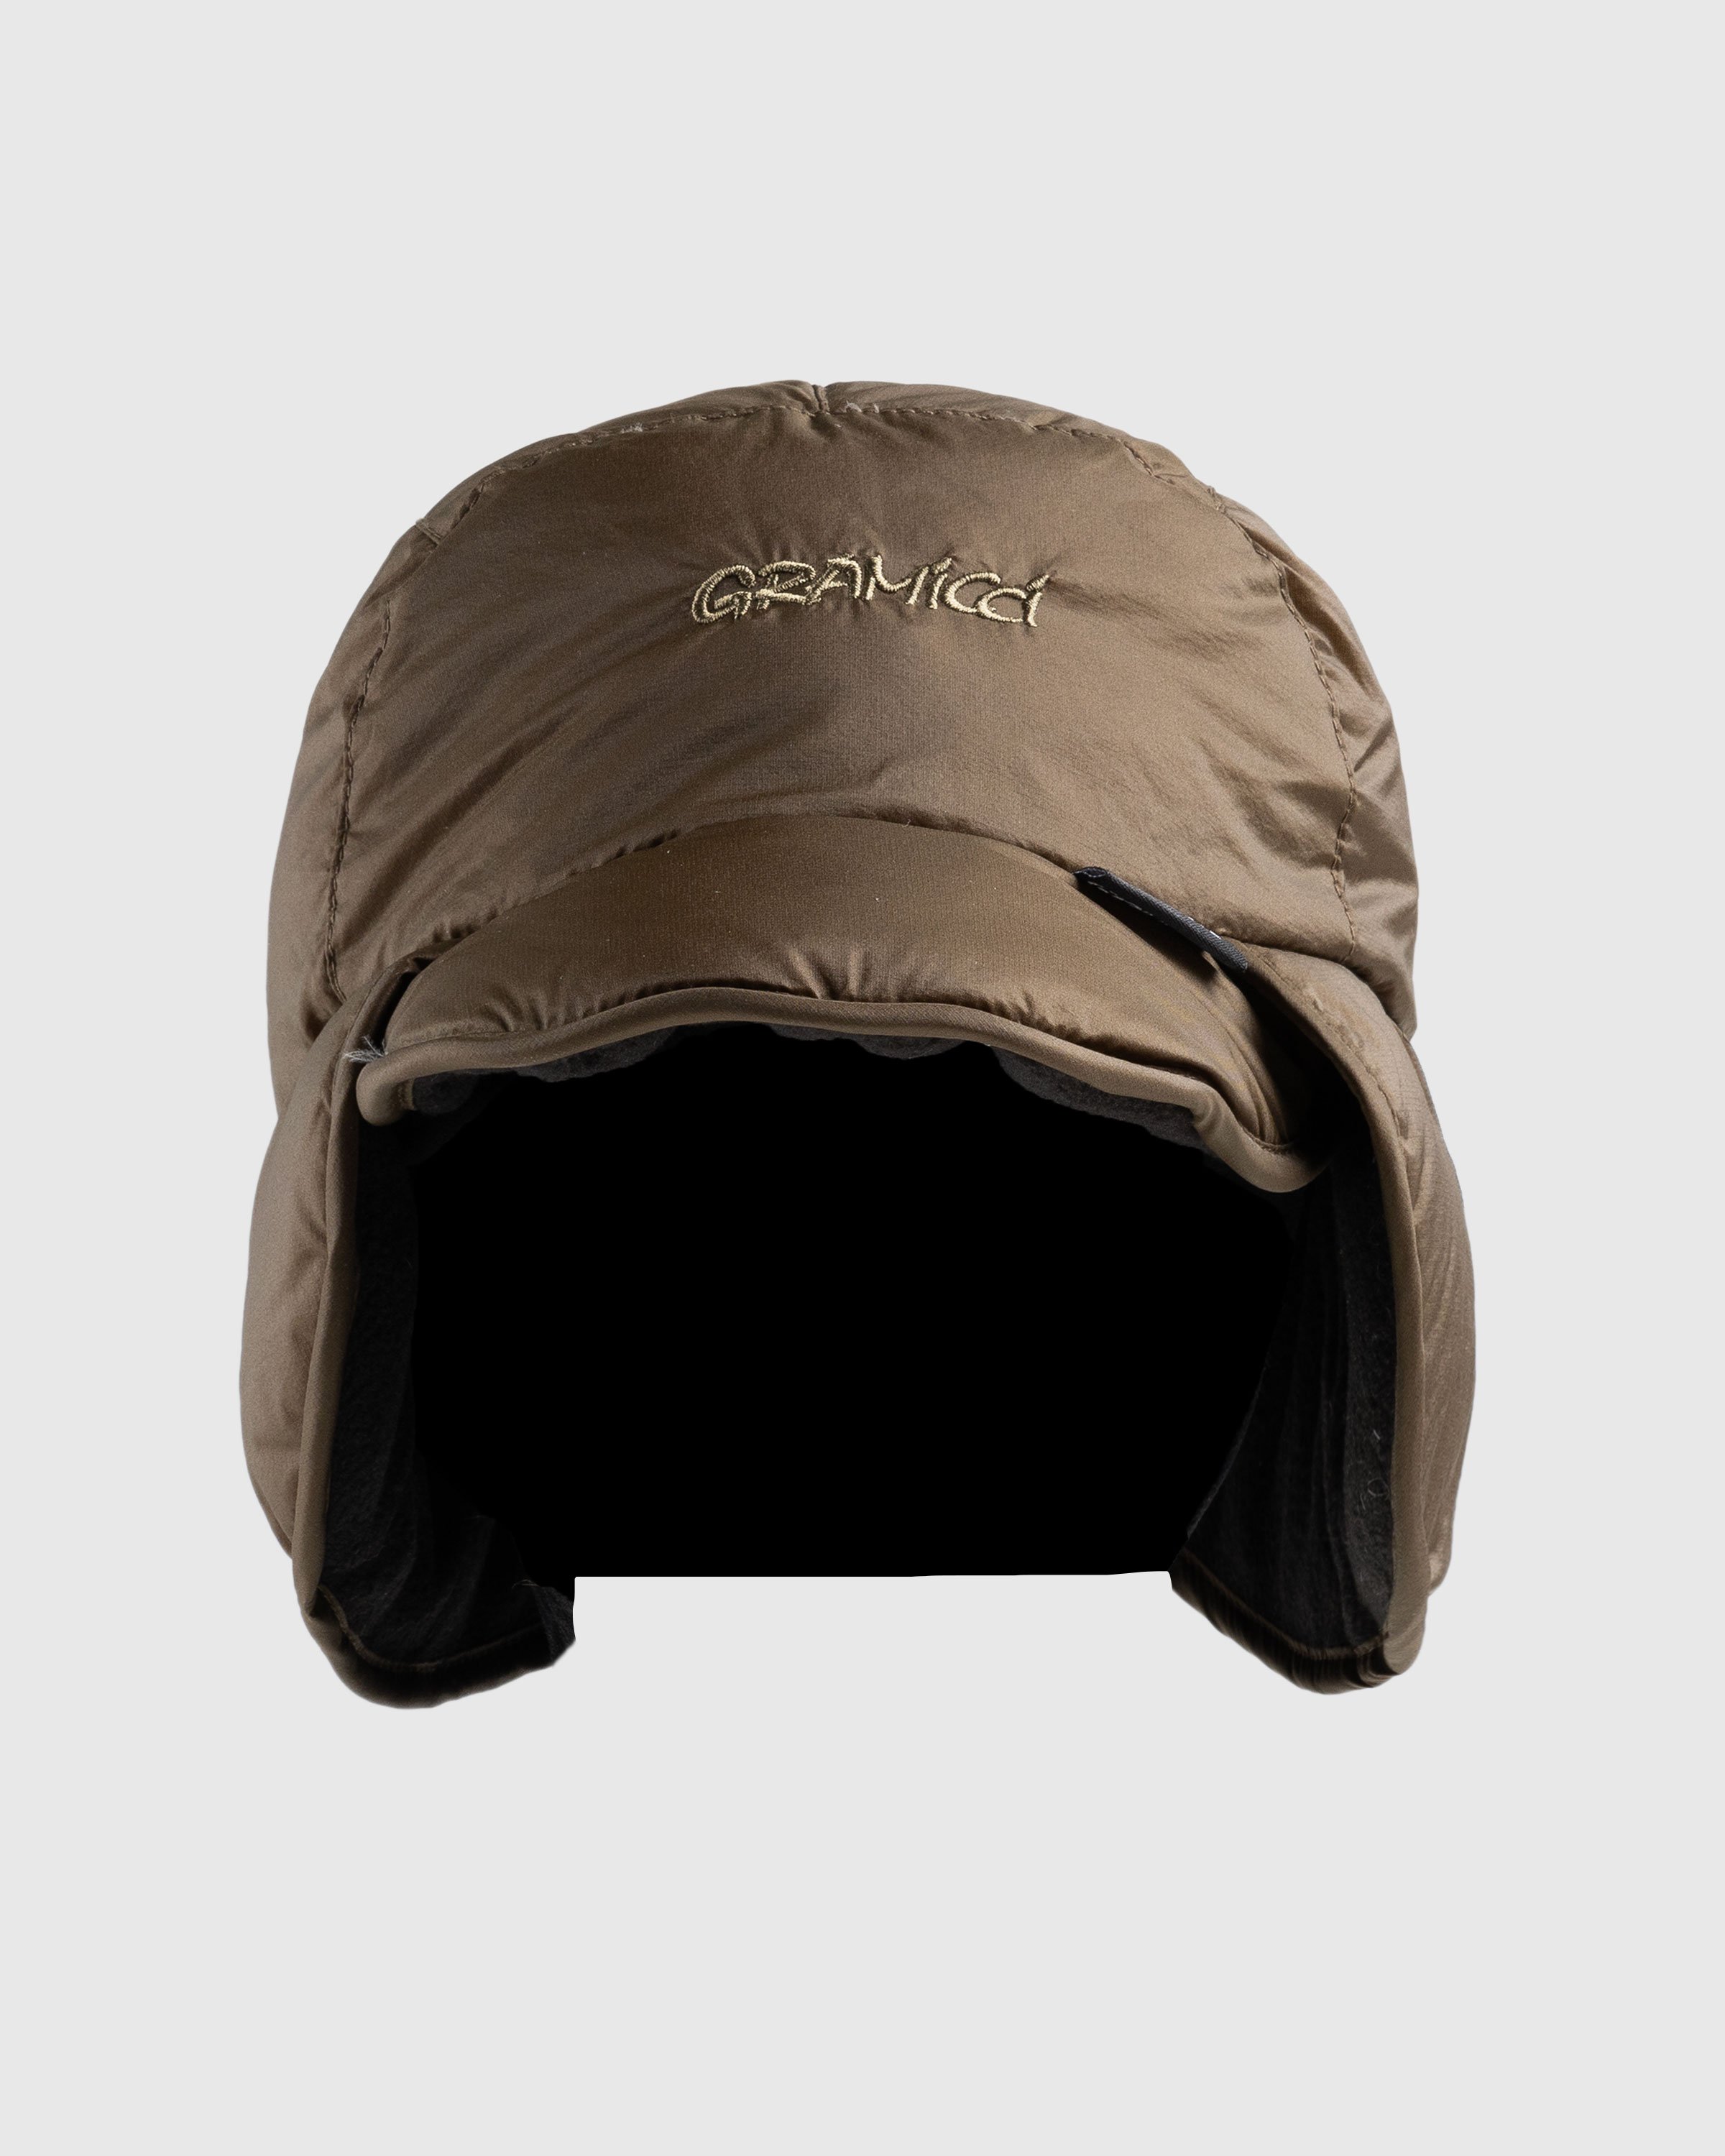 Gramicci - DOWN MOUNTAIN CAP - Accessories - Green - Image 1